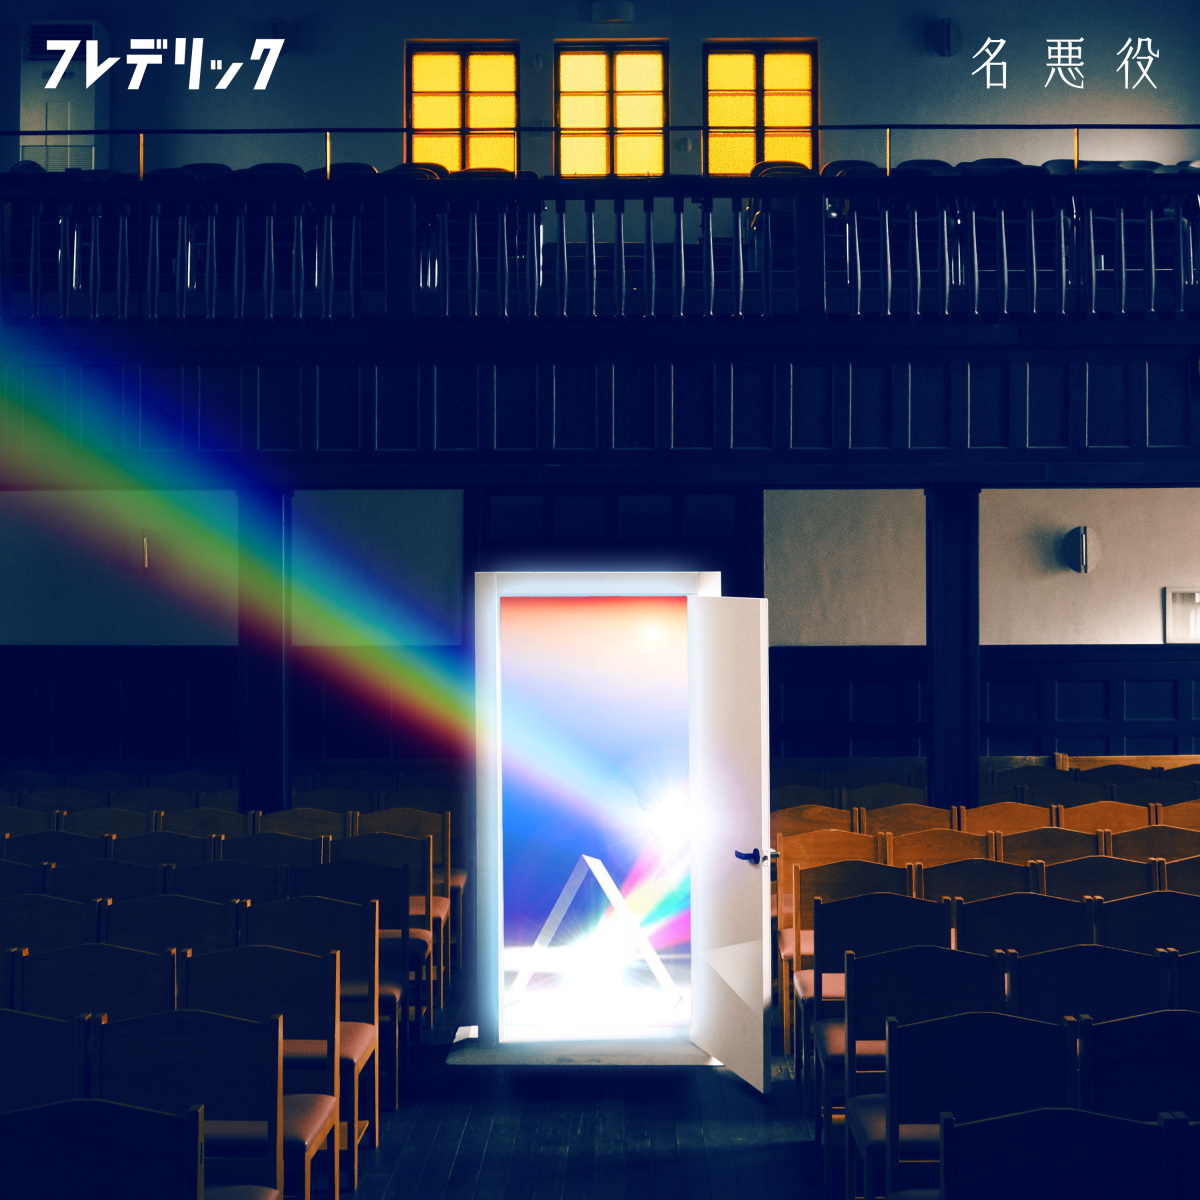 Cover for『Frederic - Meiakuyaku』from the release『Meiakuyaku』